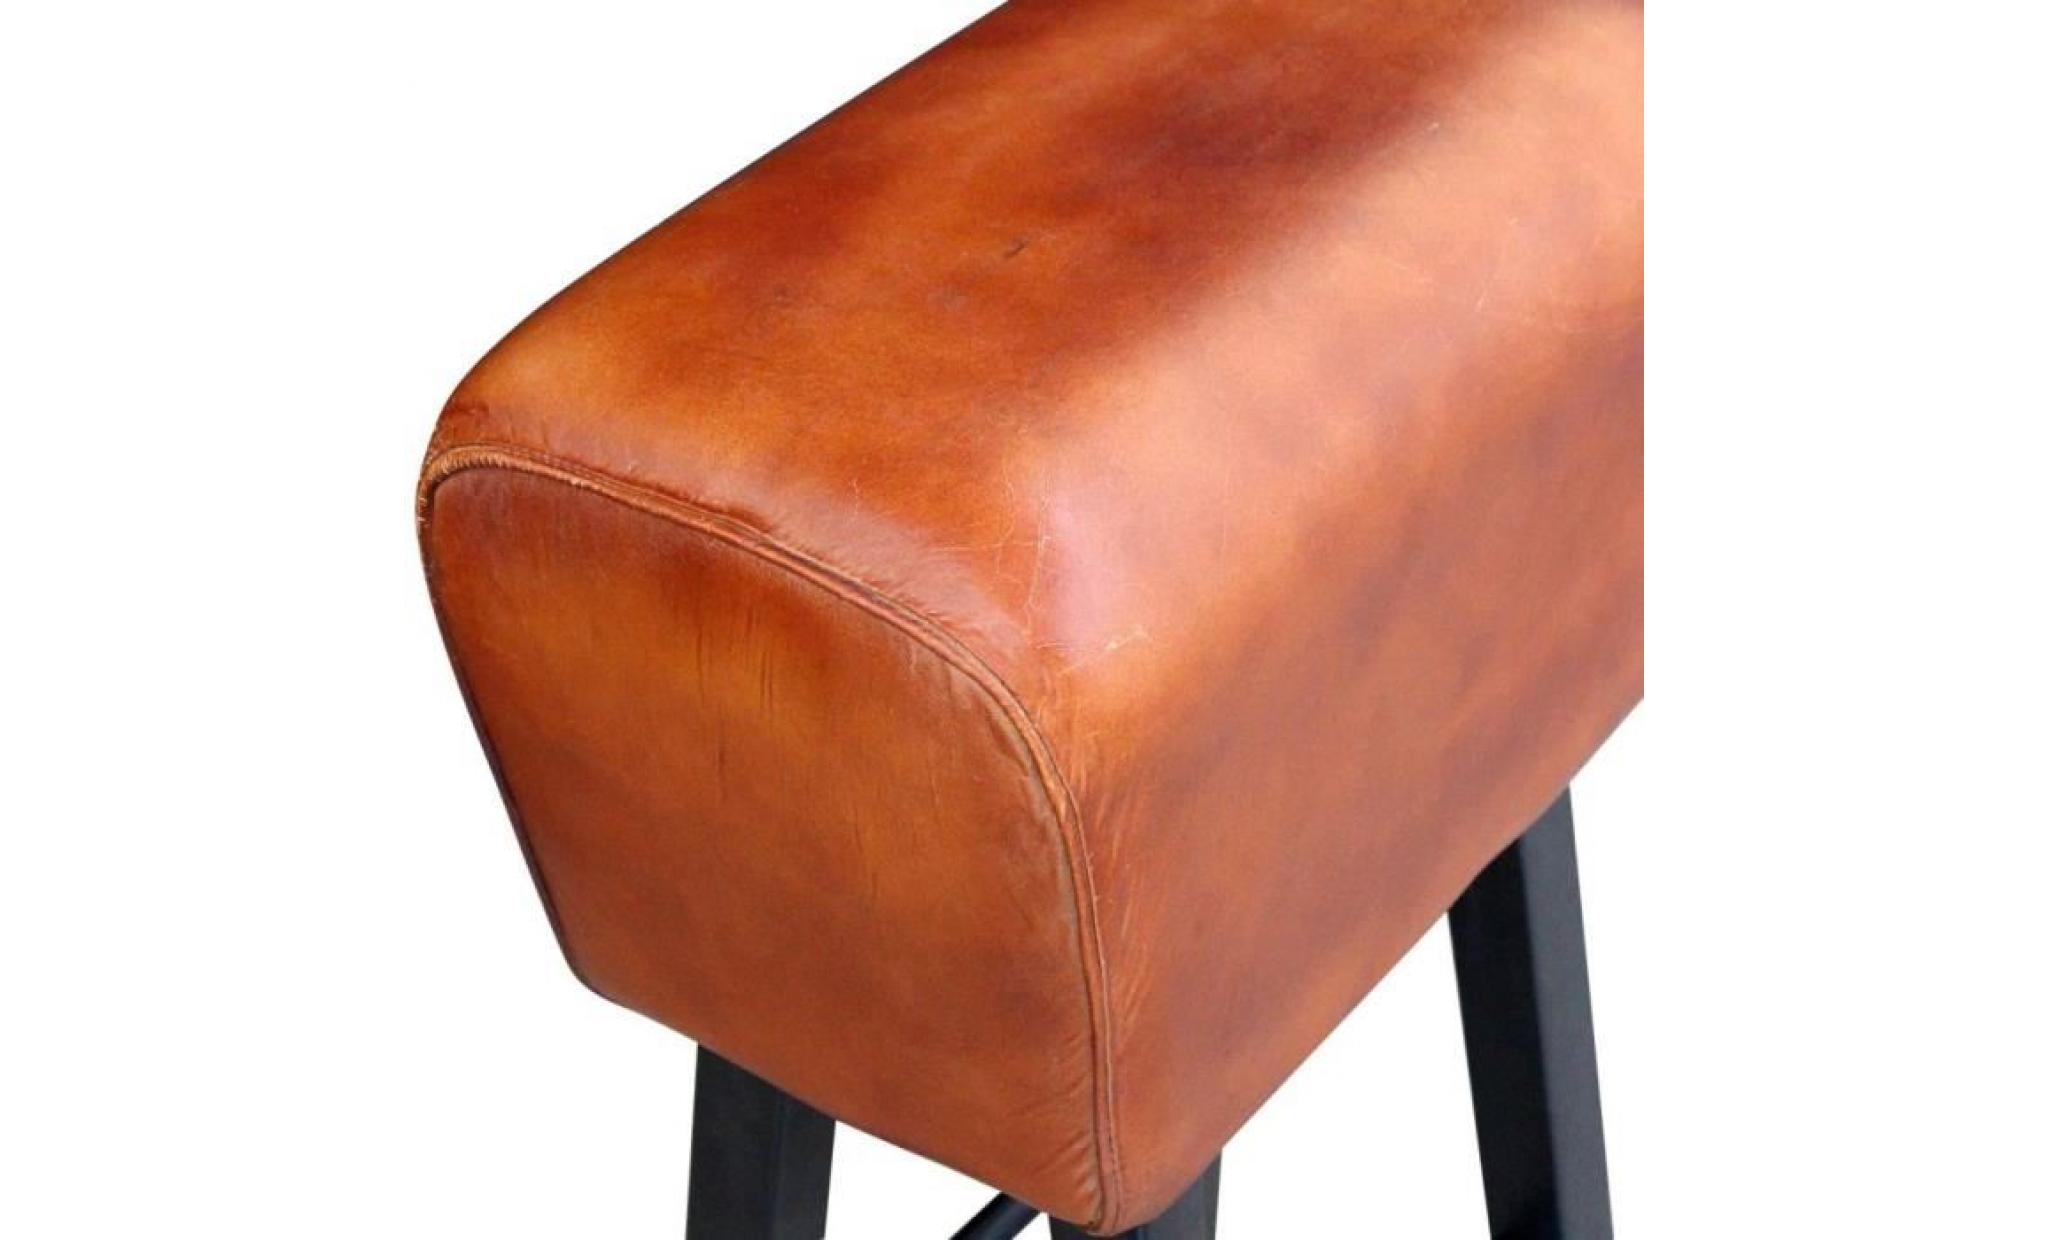 chaise de bar tabouret de bar en cuir véritable marron pas cher